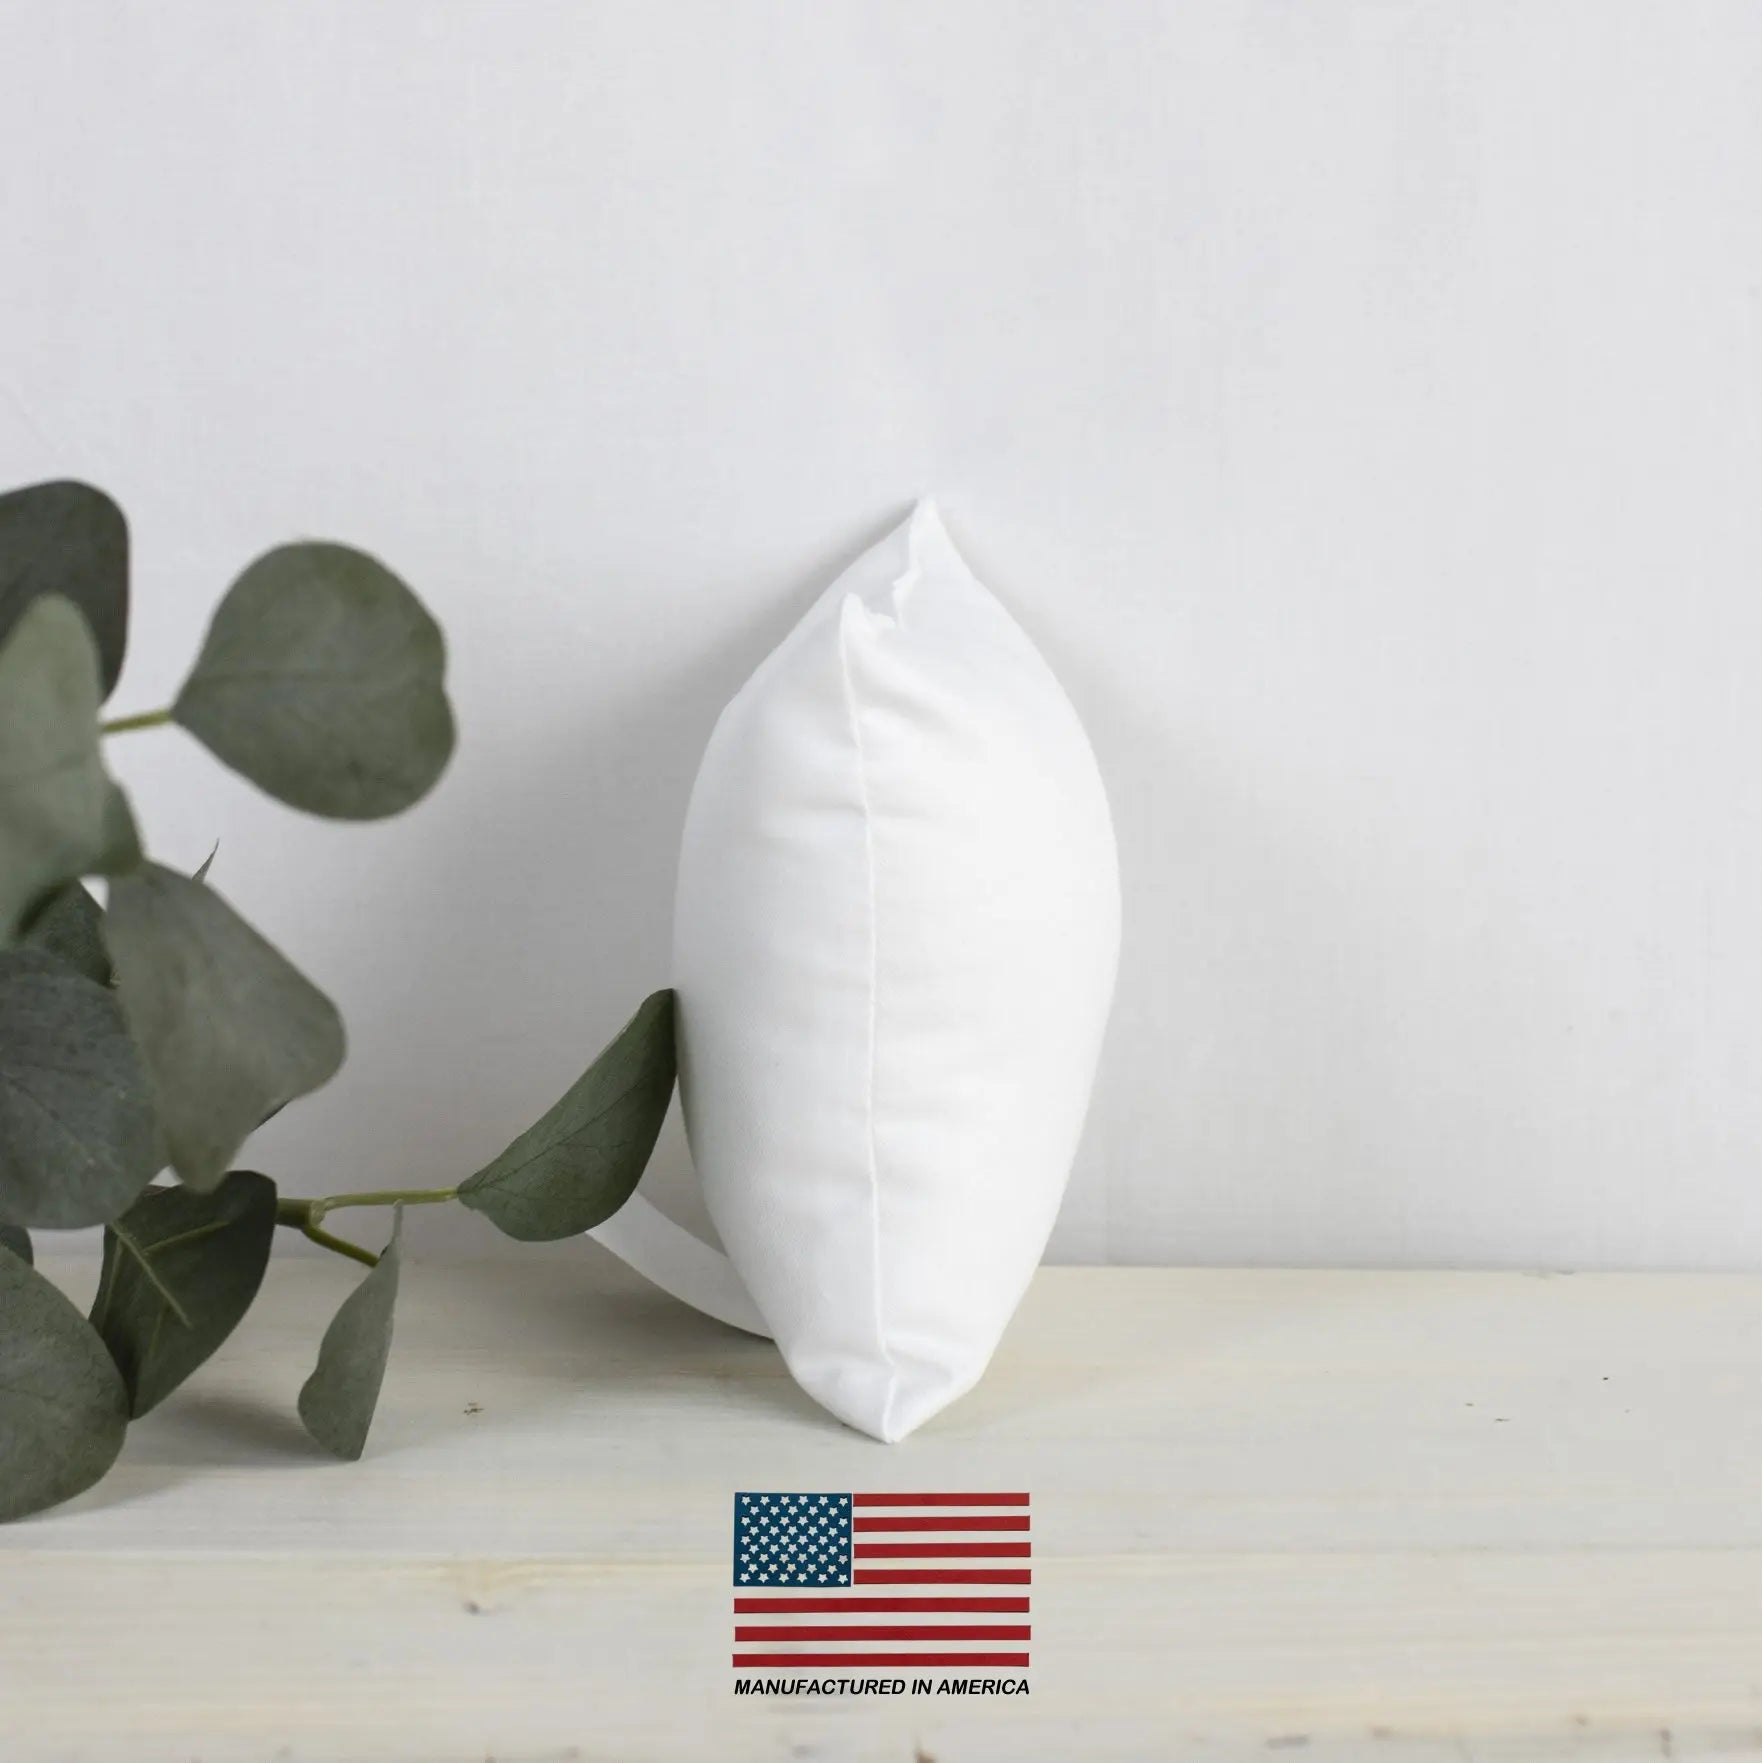  ReynosoHomeDecor 8x8 Inch Square White Cotton-Blend Throw Pillow  Insert Form : Home & Kitchen